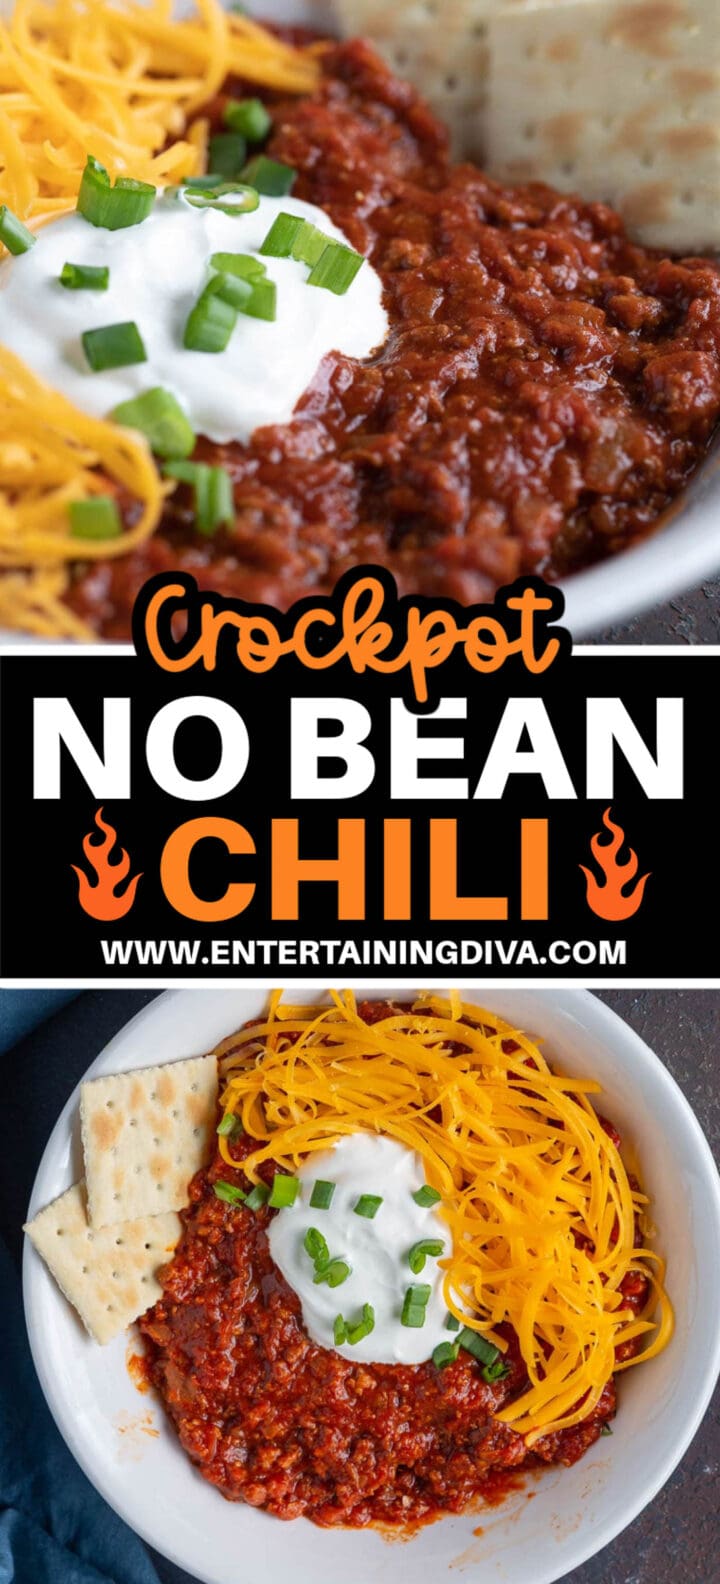 Crockpot no bean chili with turkey.